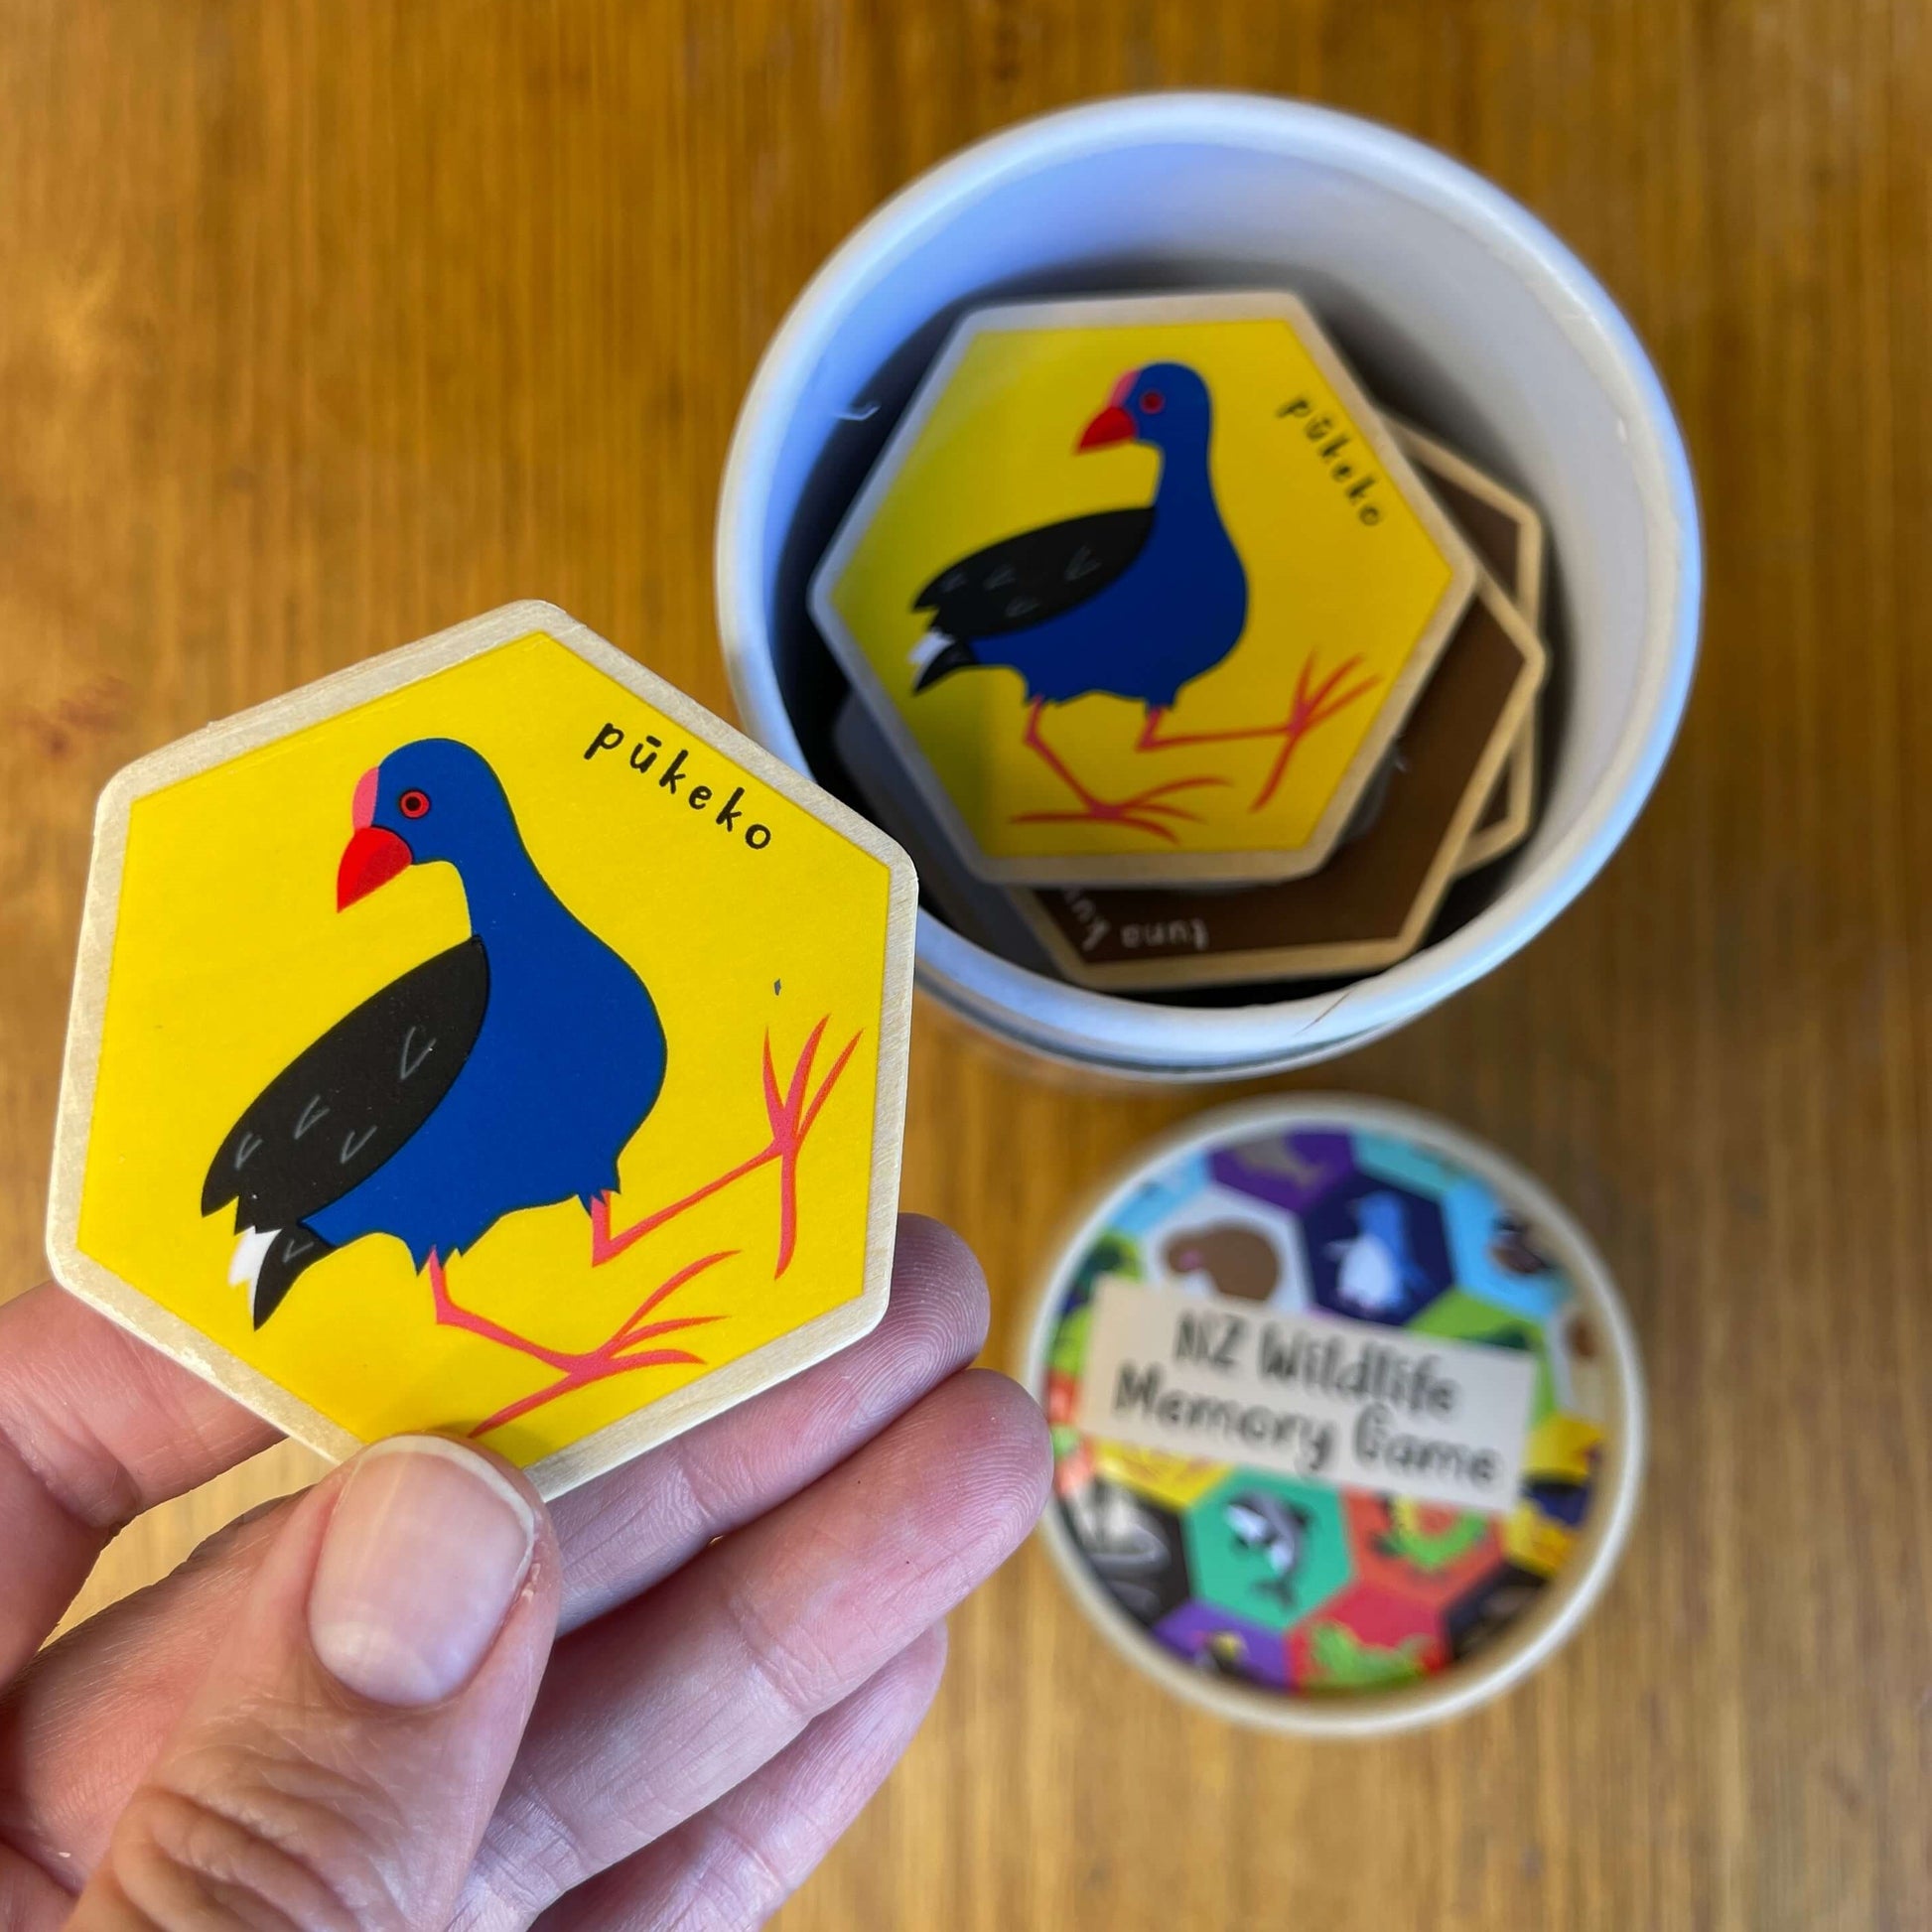  Wooden hexagon blocks featuring Pukeko bird as part of an NZ Wildlife Memory Game.